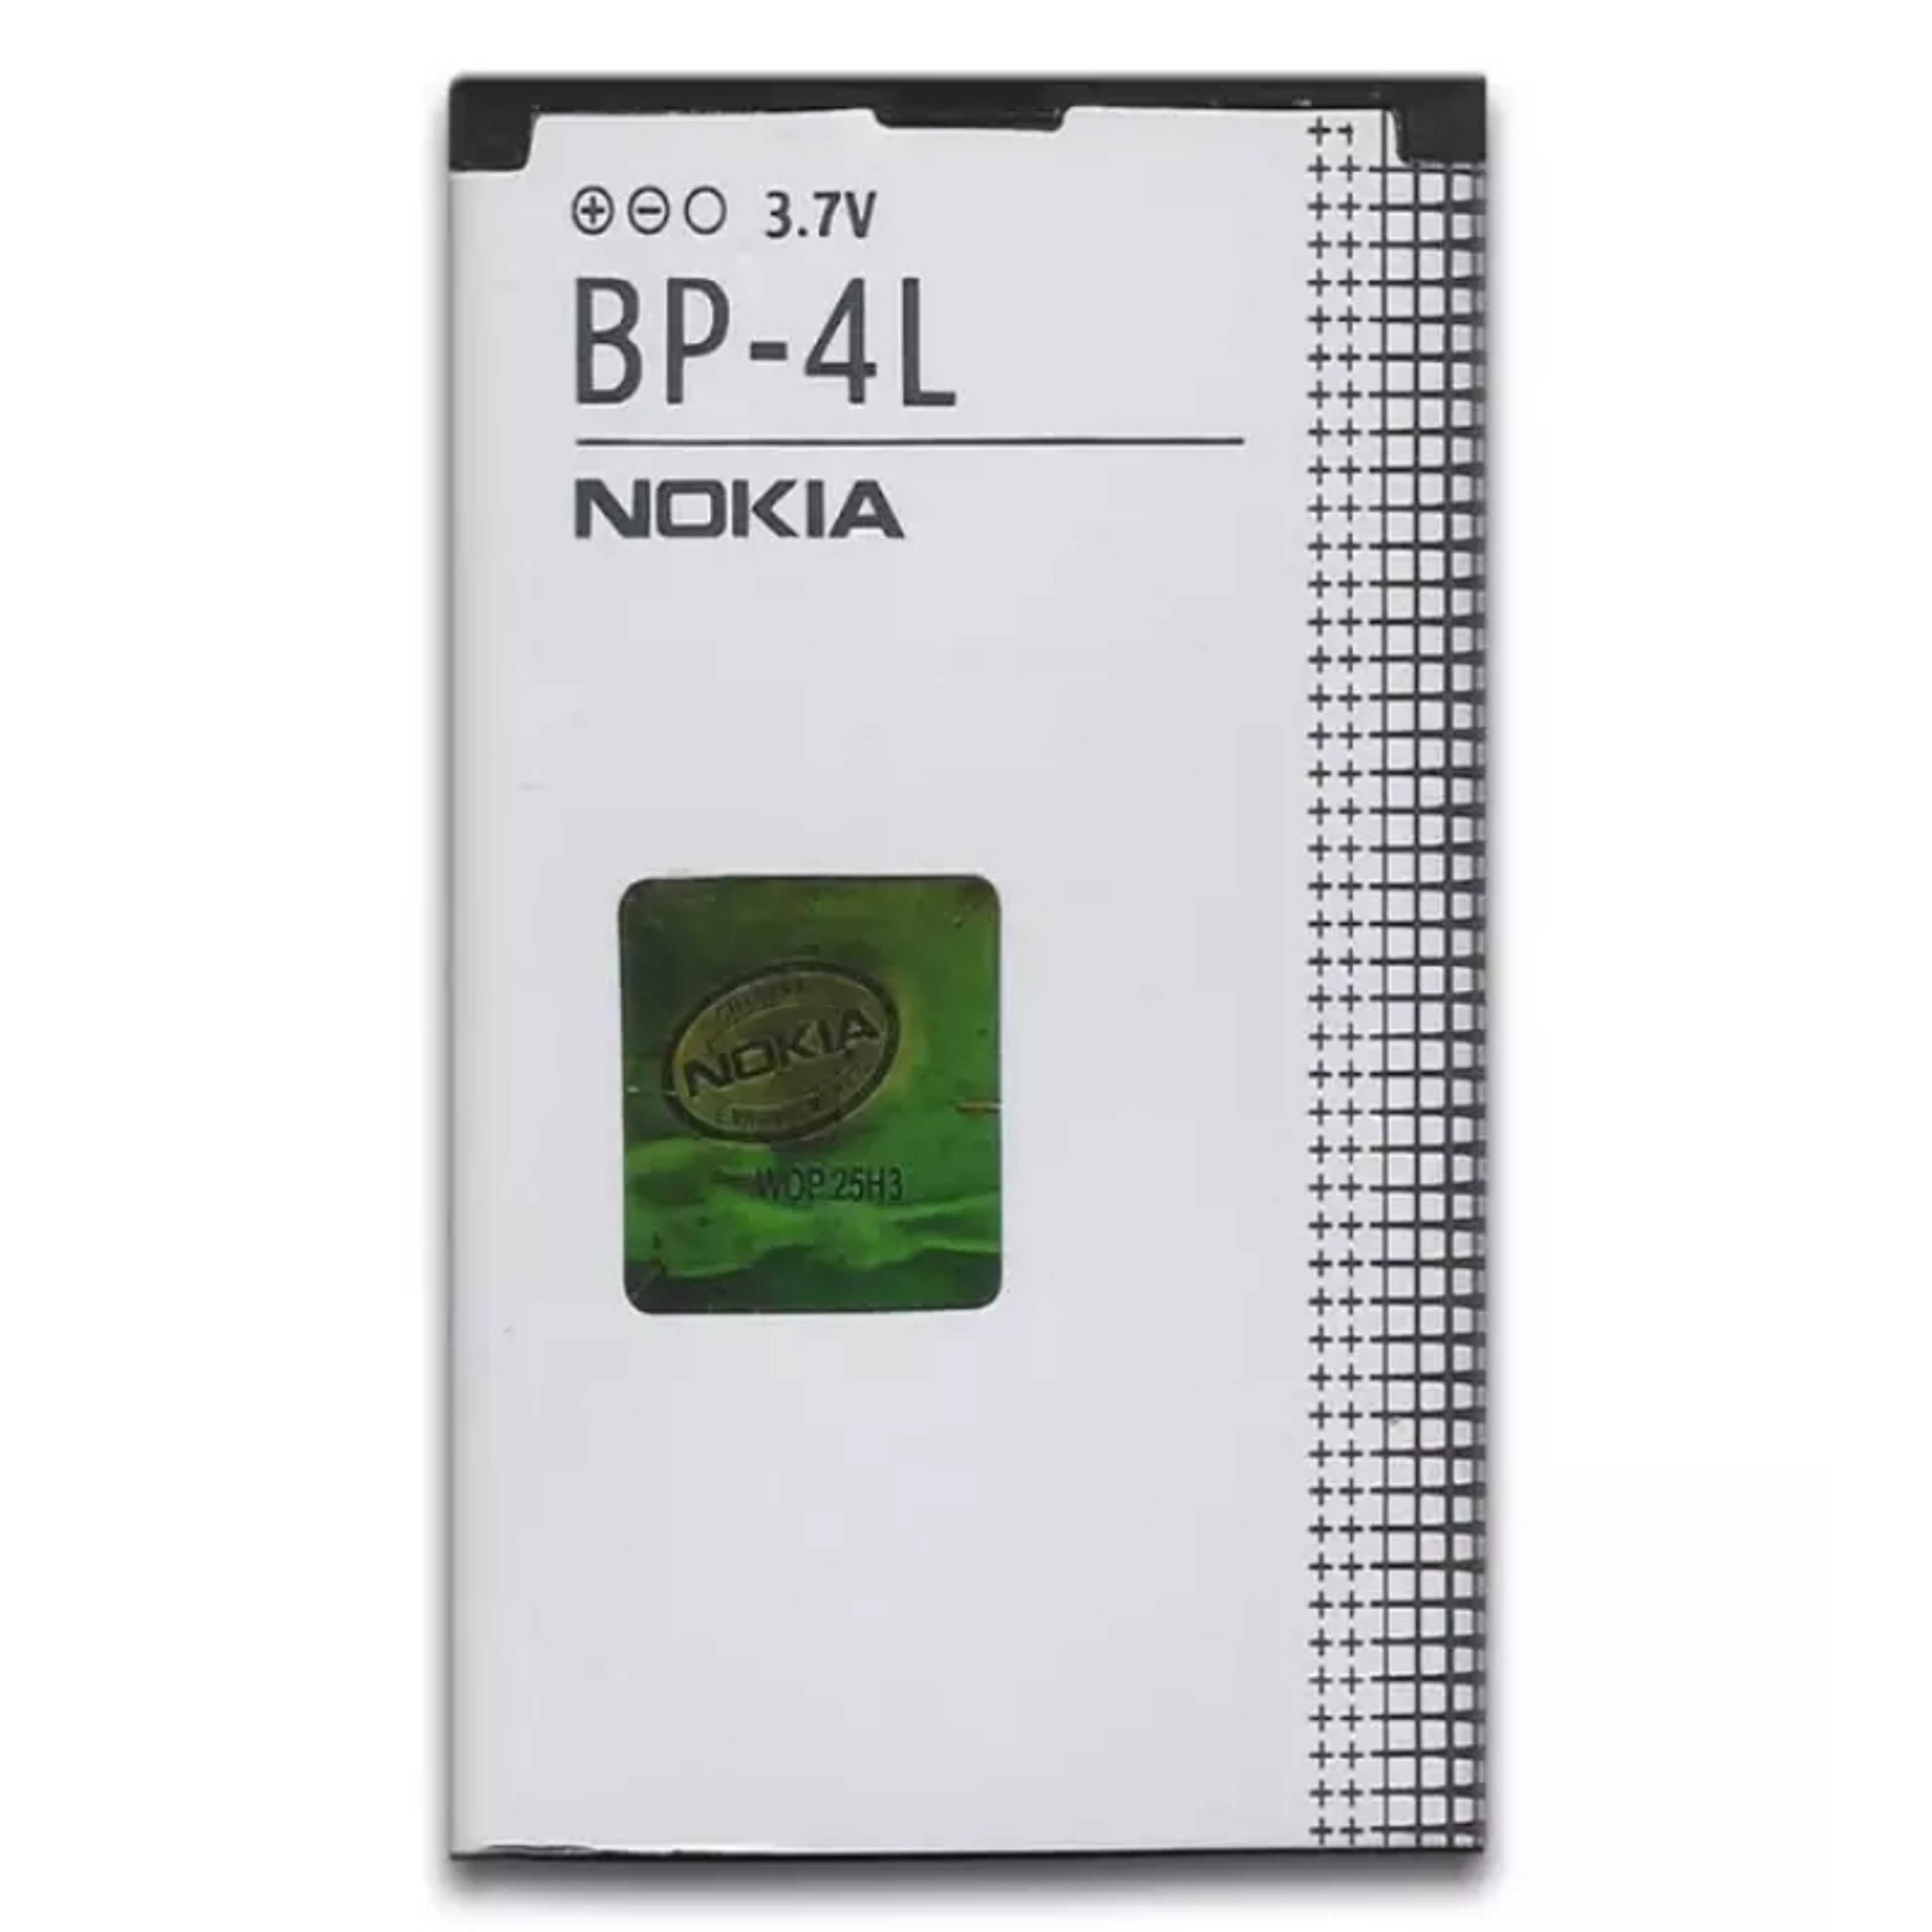 BP-4L Battery for Nokia N97, E63, E71, E72, E73, E90, N810 – Silver